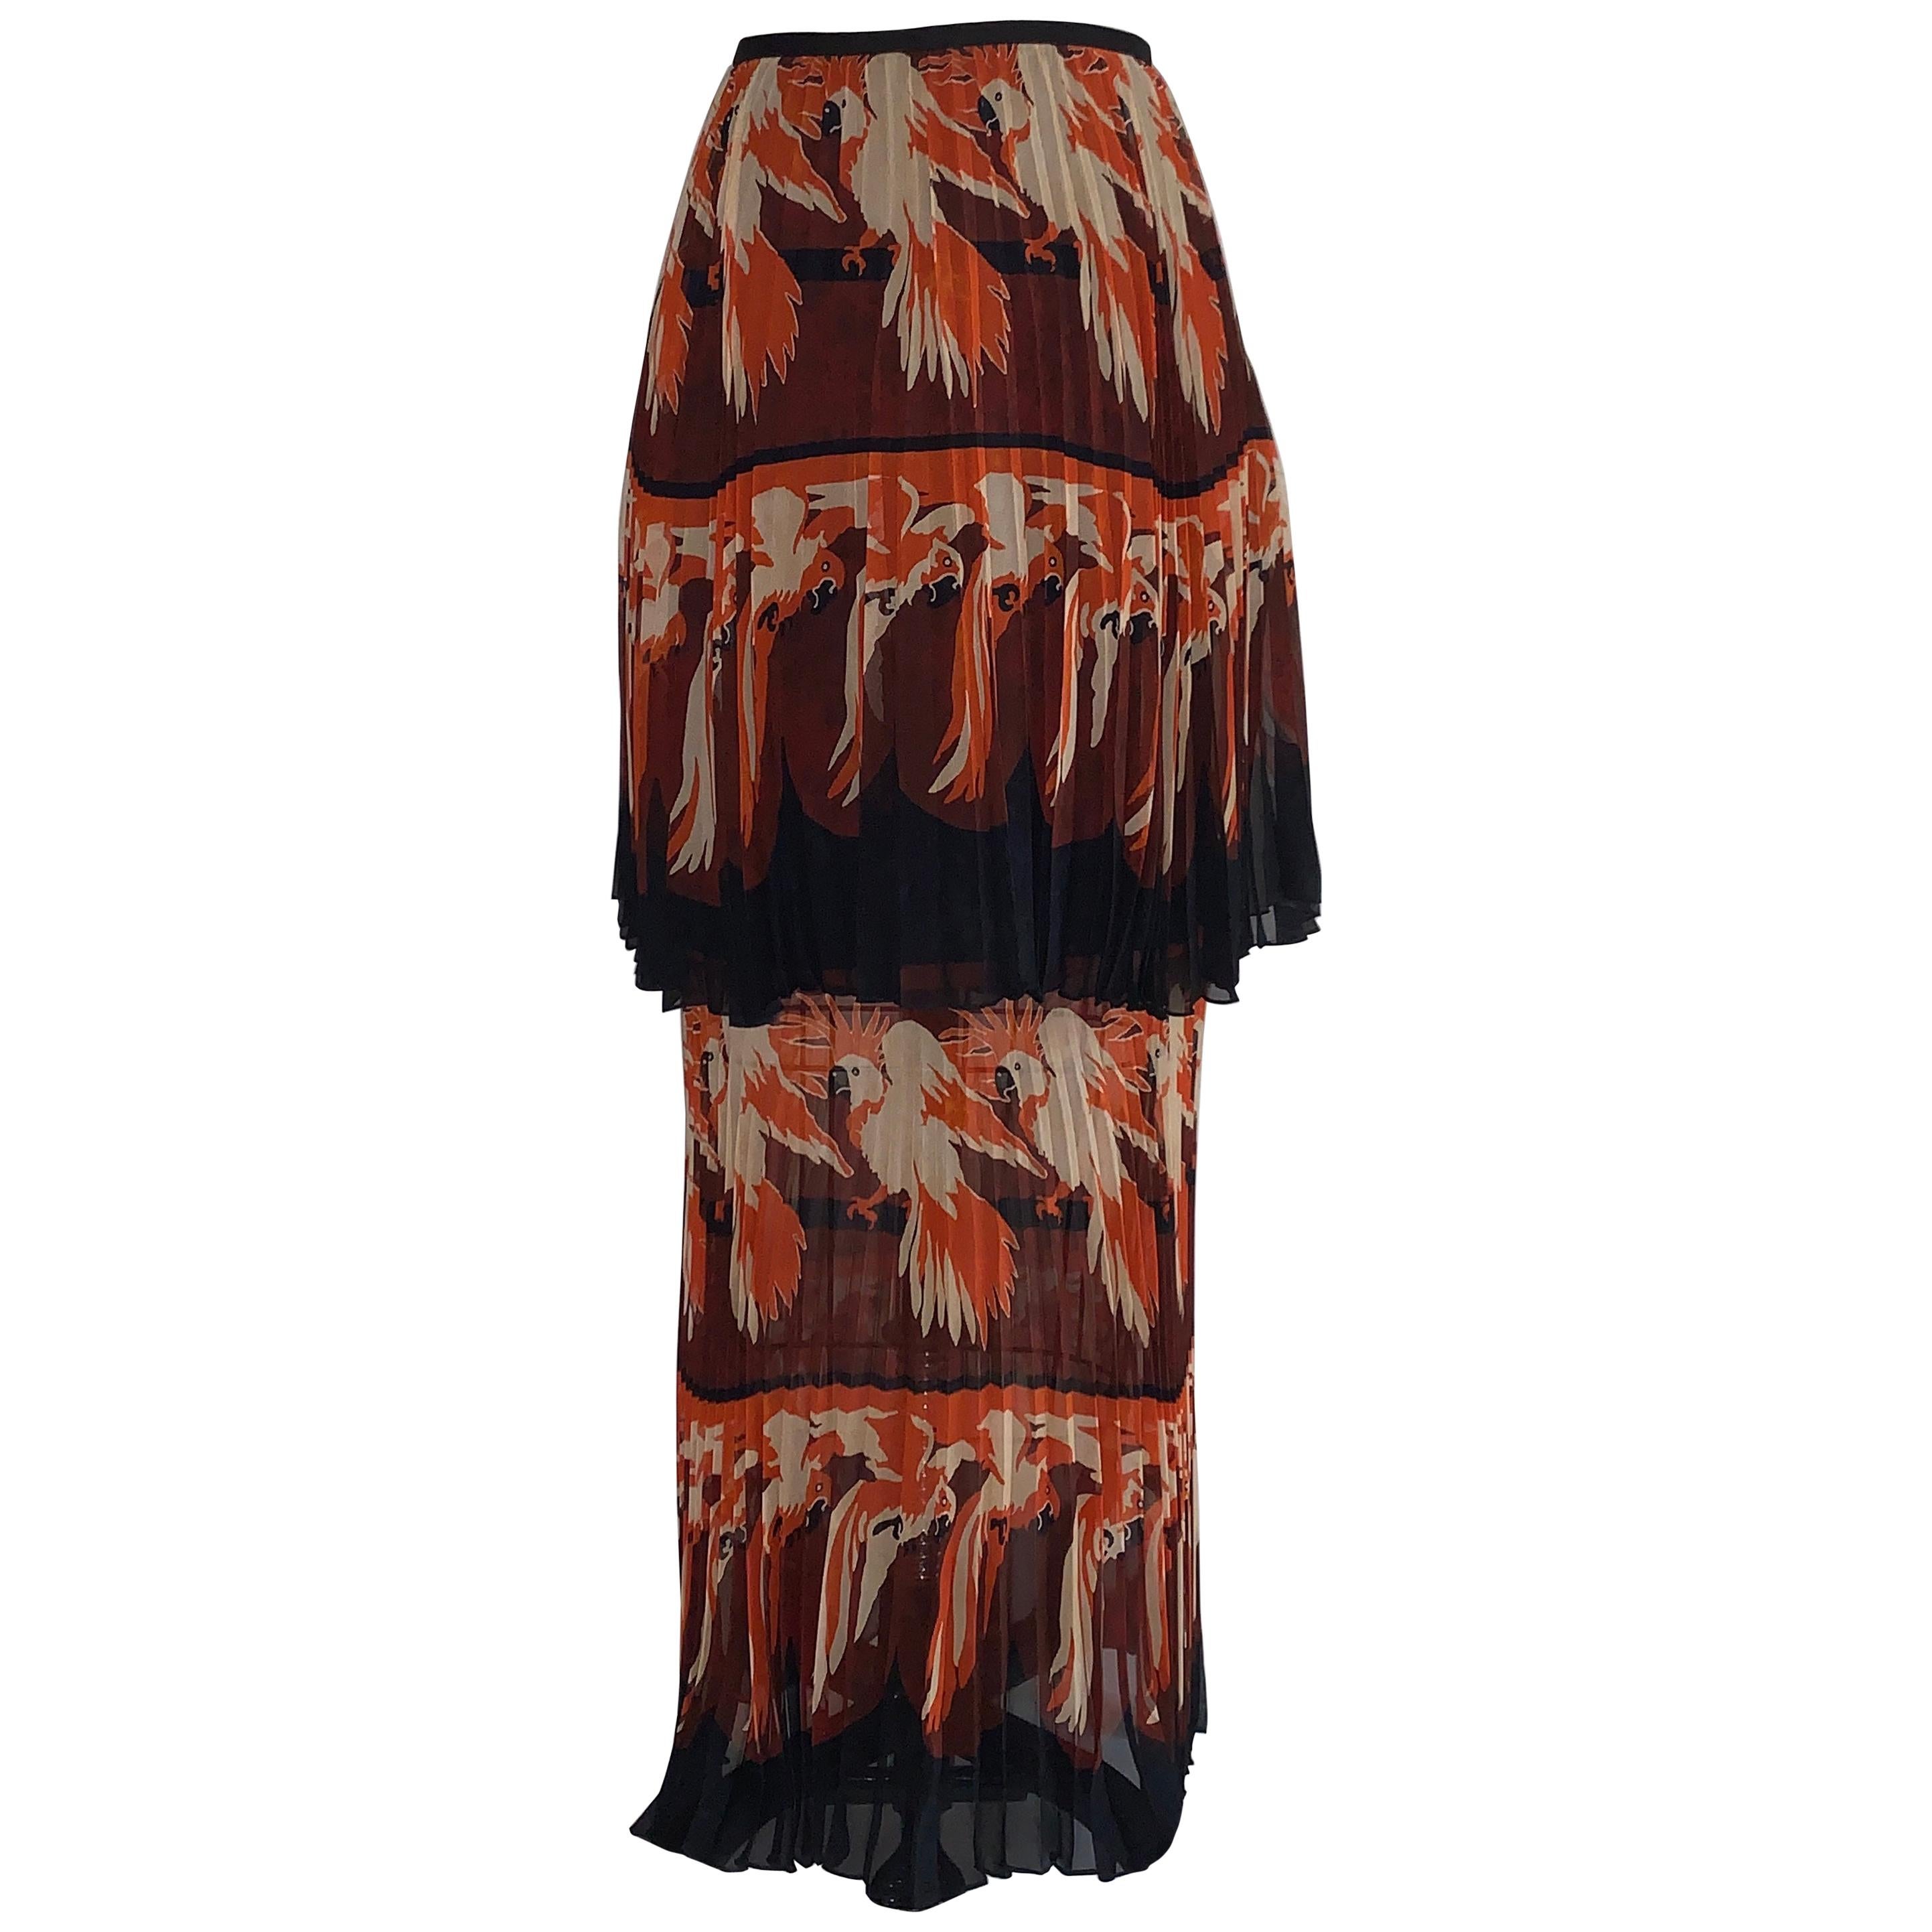 New Fendi Parakeet Print Silk Pleat Two Tier Skirt in Black, Orange and Burgundy For Sale